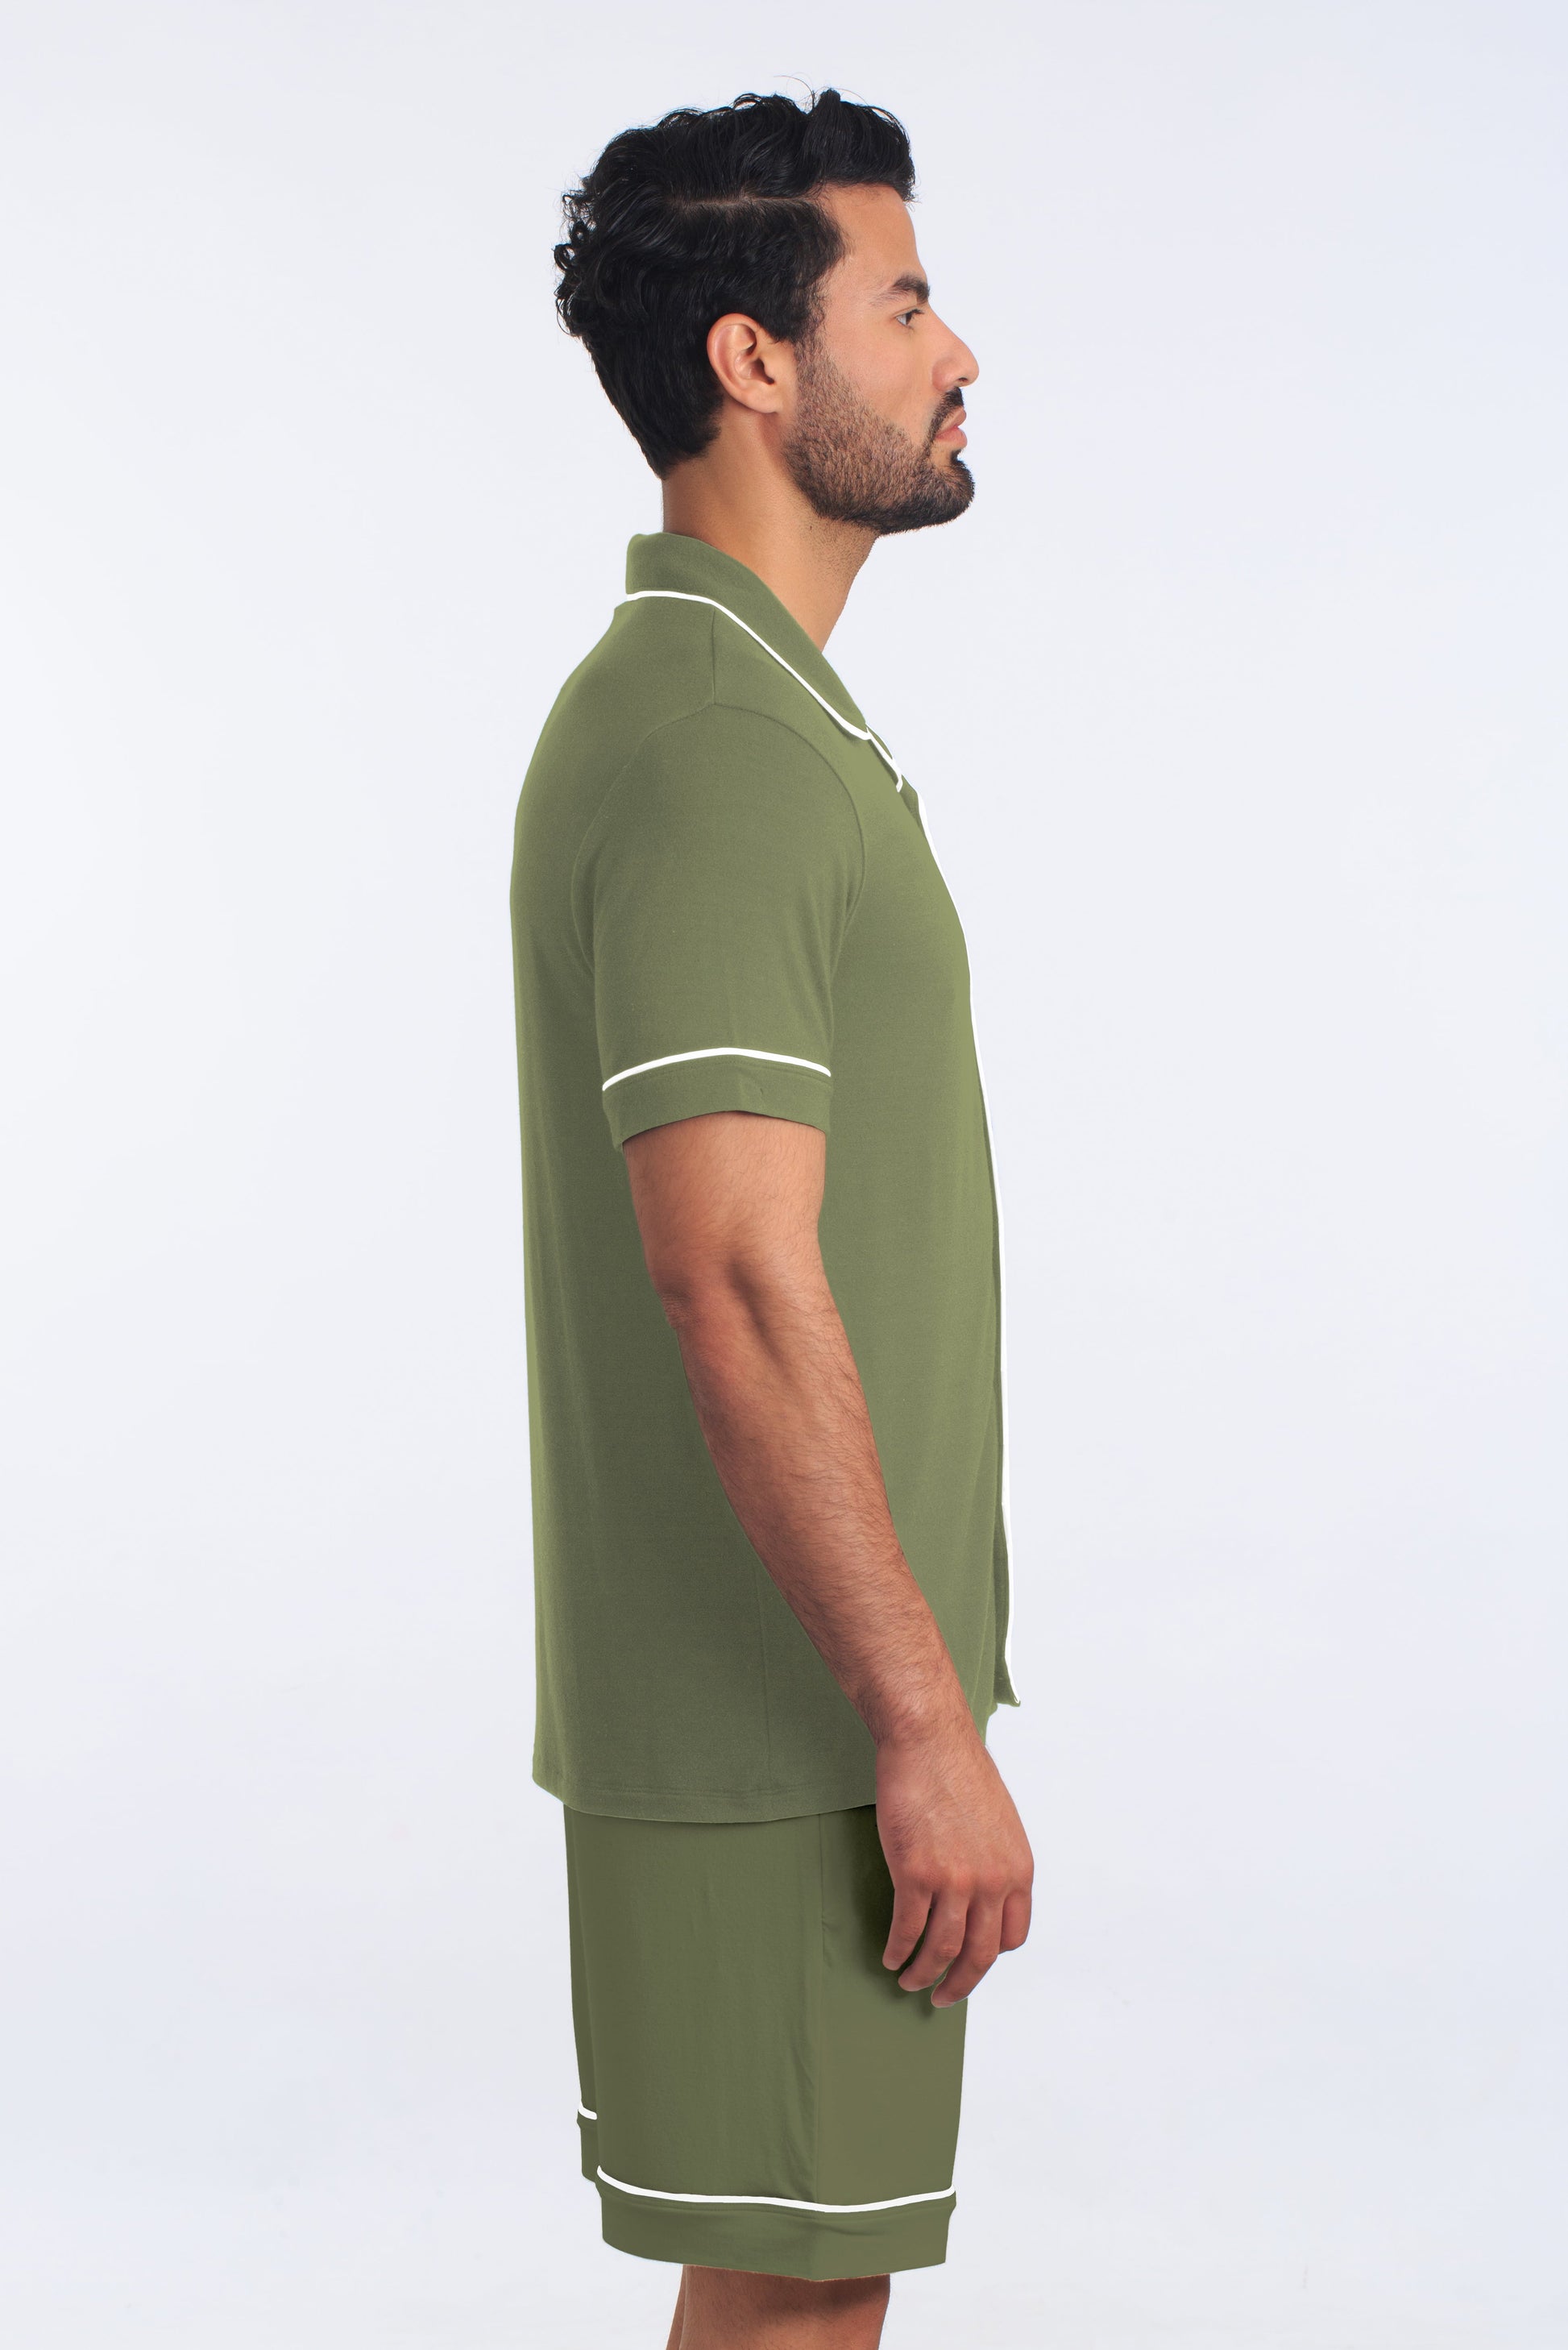 Loden Green PJ Boyfriend Set (Shirt + Short) JBFSH4115 Side